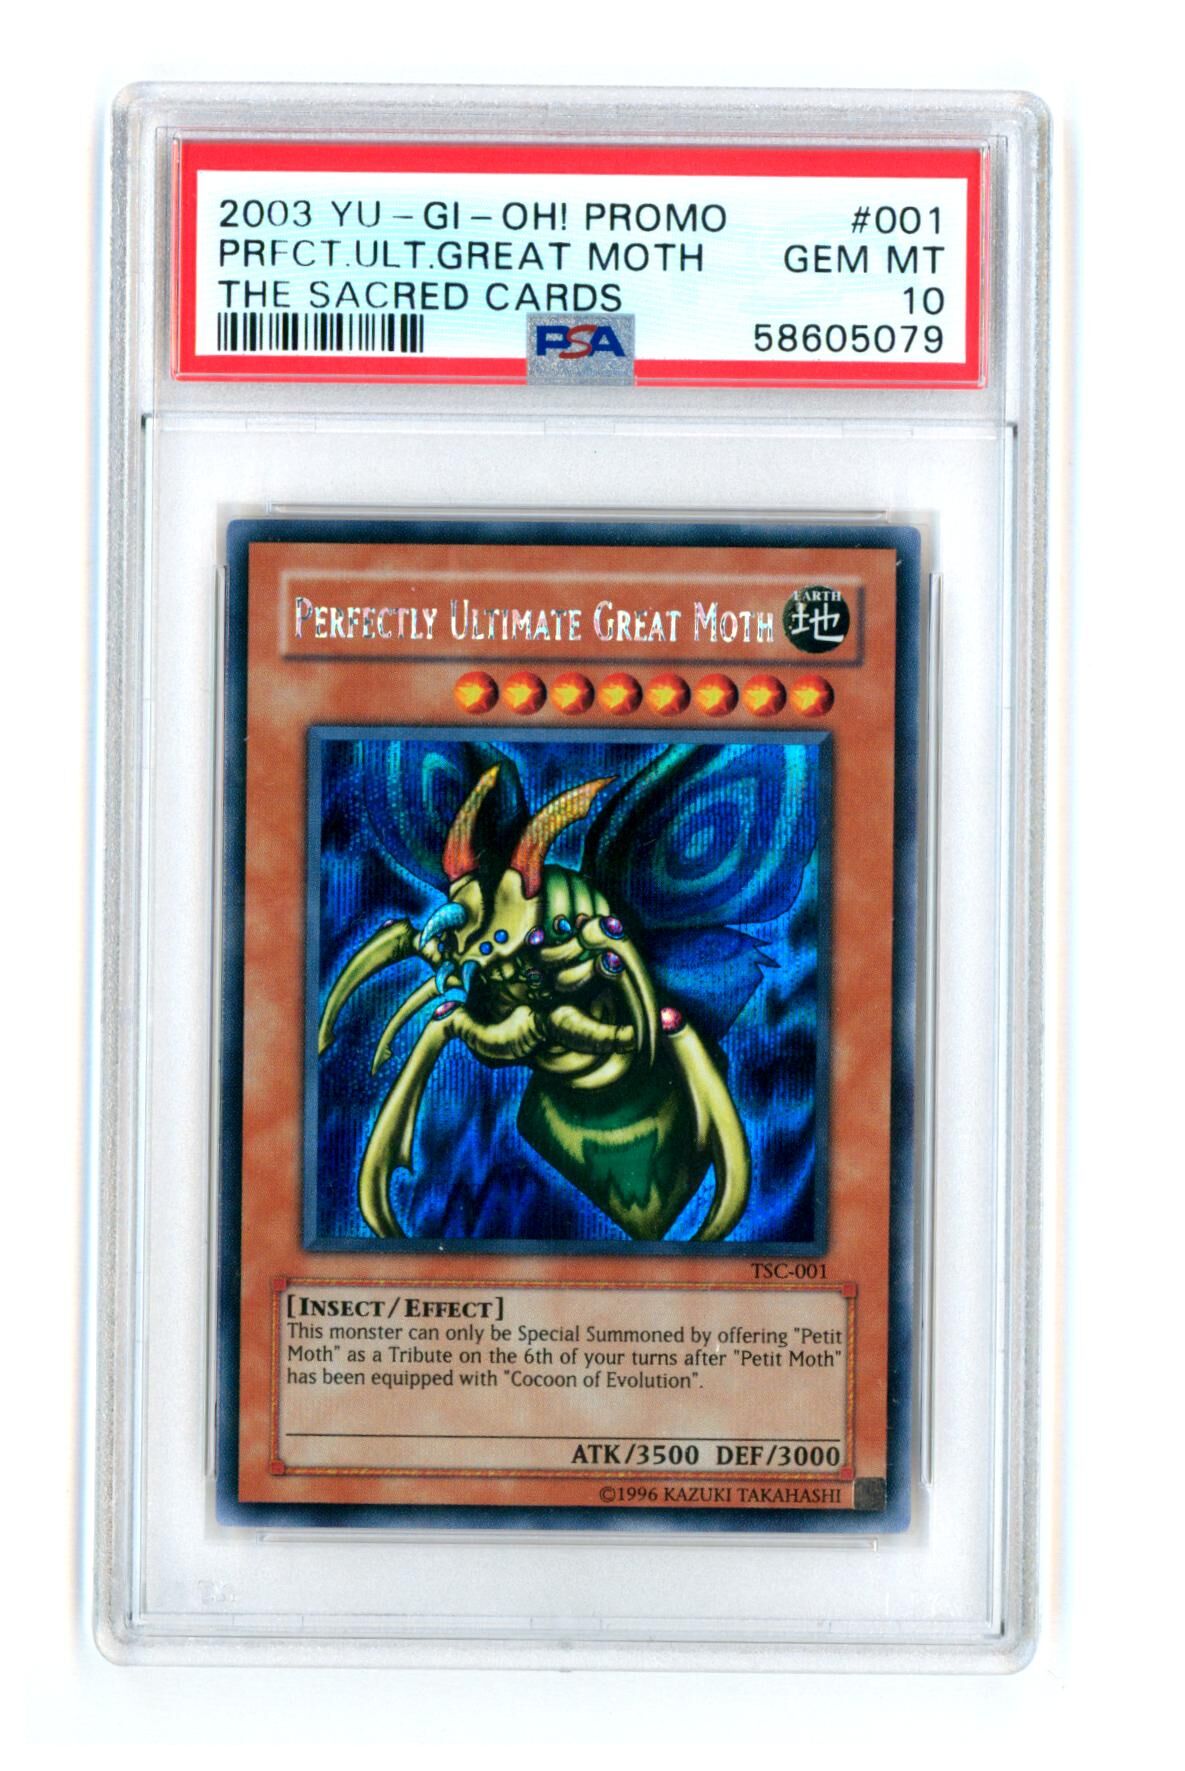 Perfect Ultimate Great Moth TSC-001 - The Sacred Cards Promo - Secret Rare - PSA 10 GEM-MT - Yu-Gi-Oh!